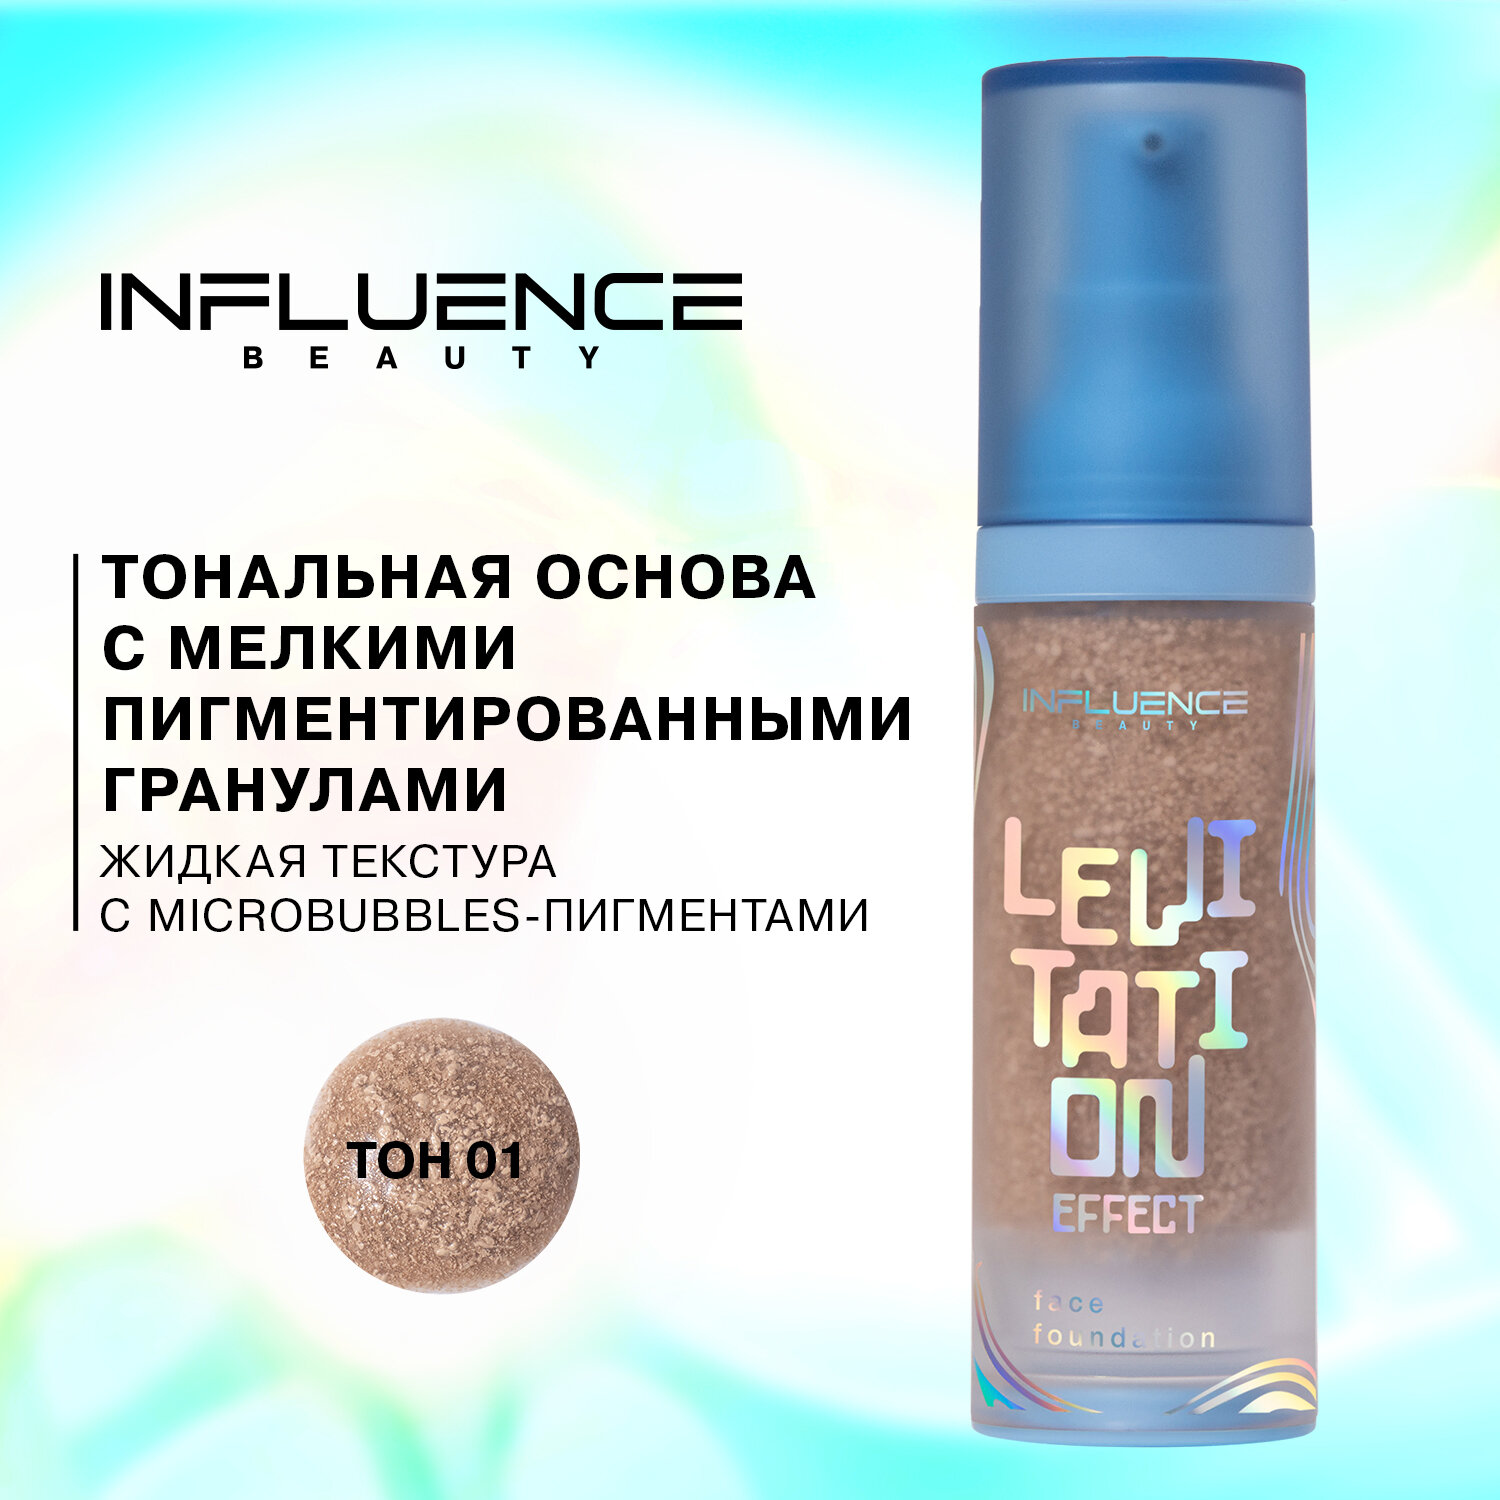 Influence Beauty Тональная основа Effect Levitation, 30 мл, оттенок: 01, 1 шт.